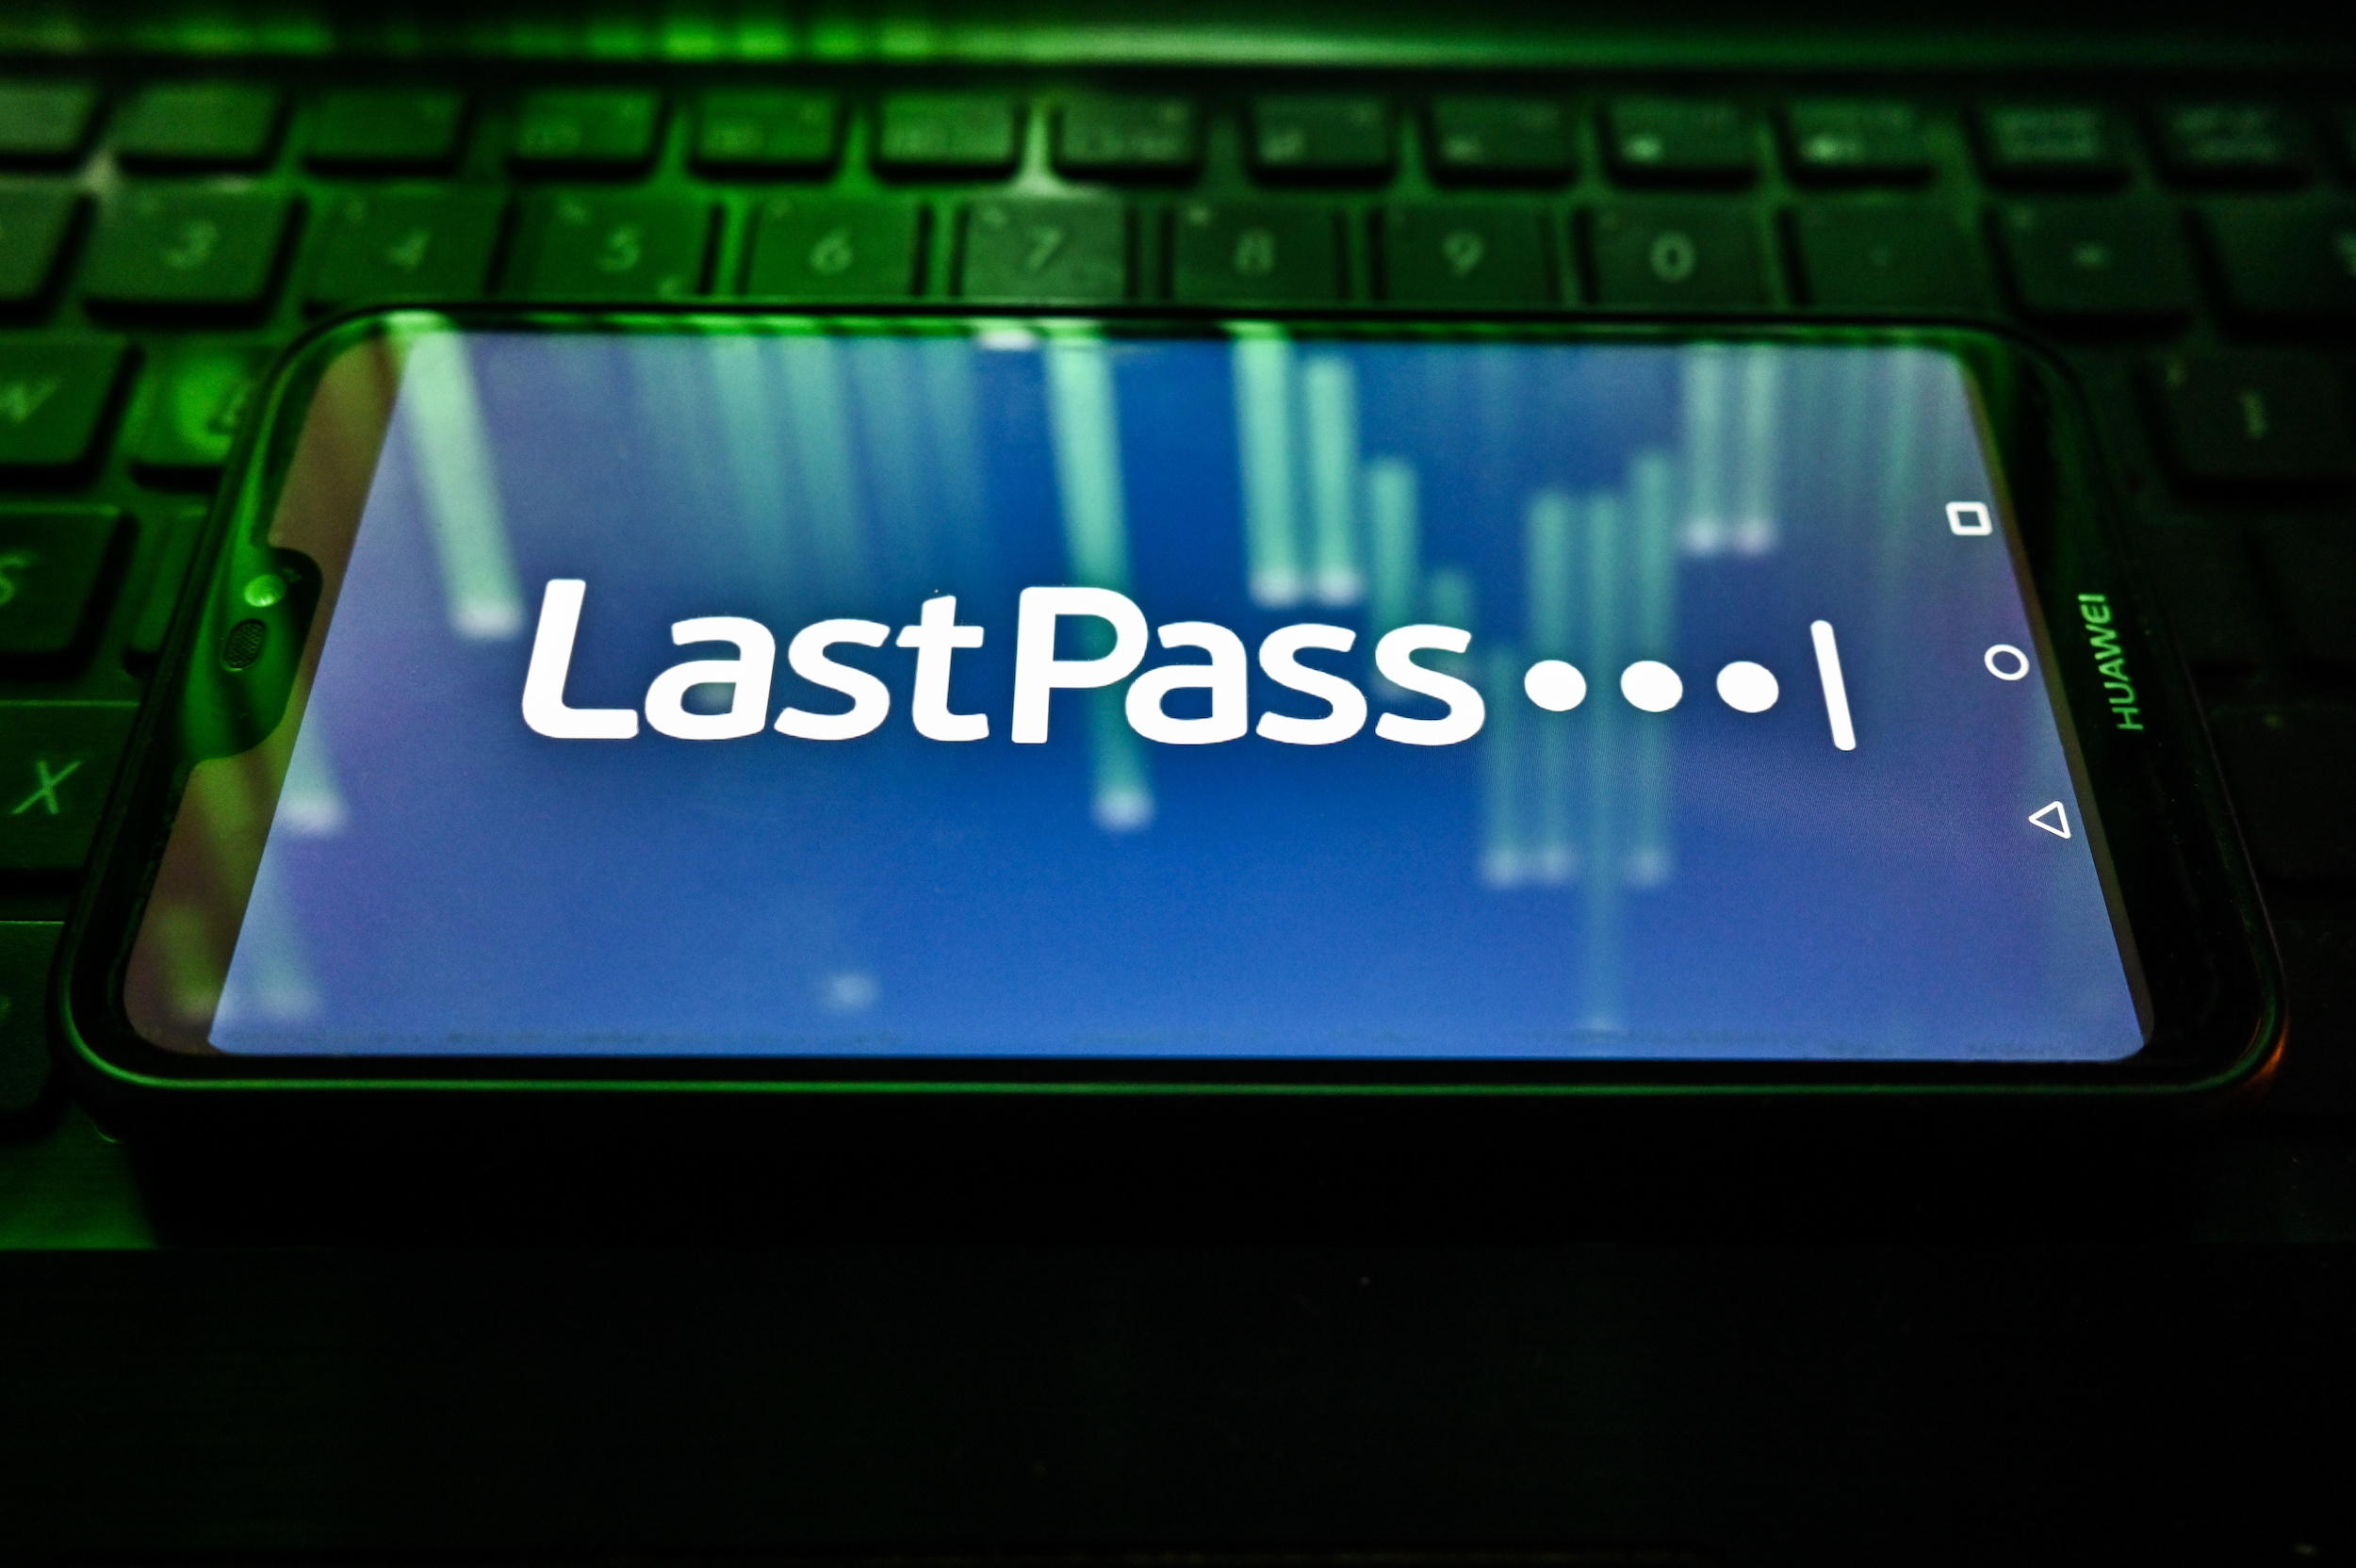 Ars Technica: The Password Game will make yo… - Mastodon